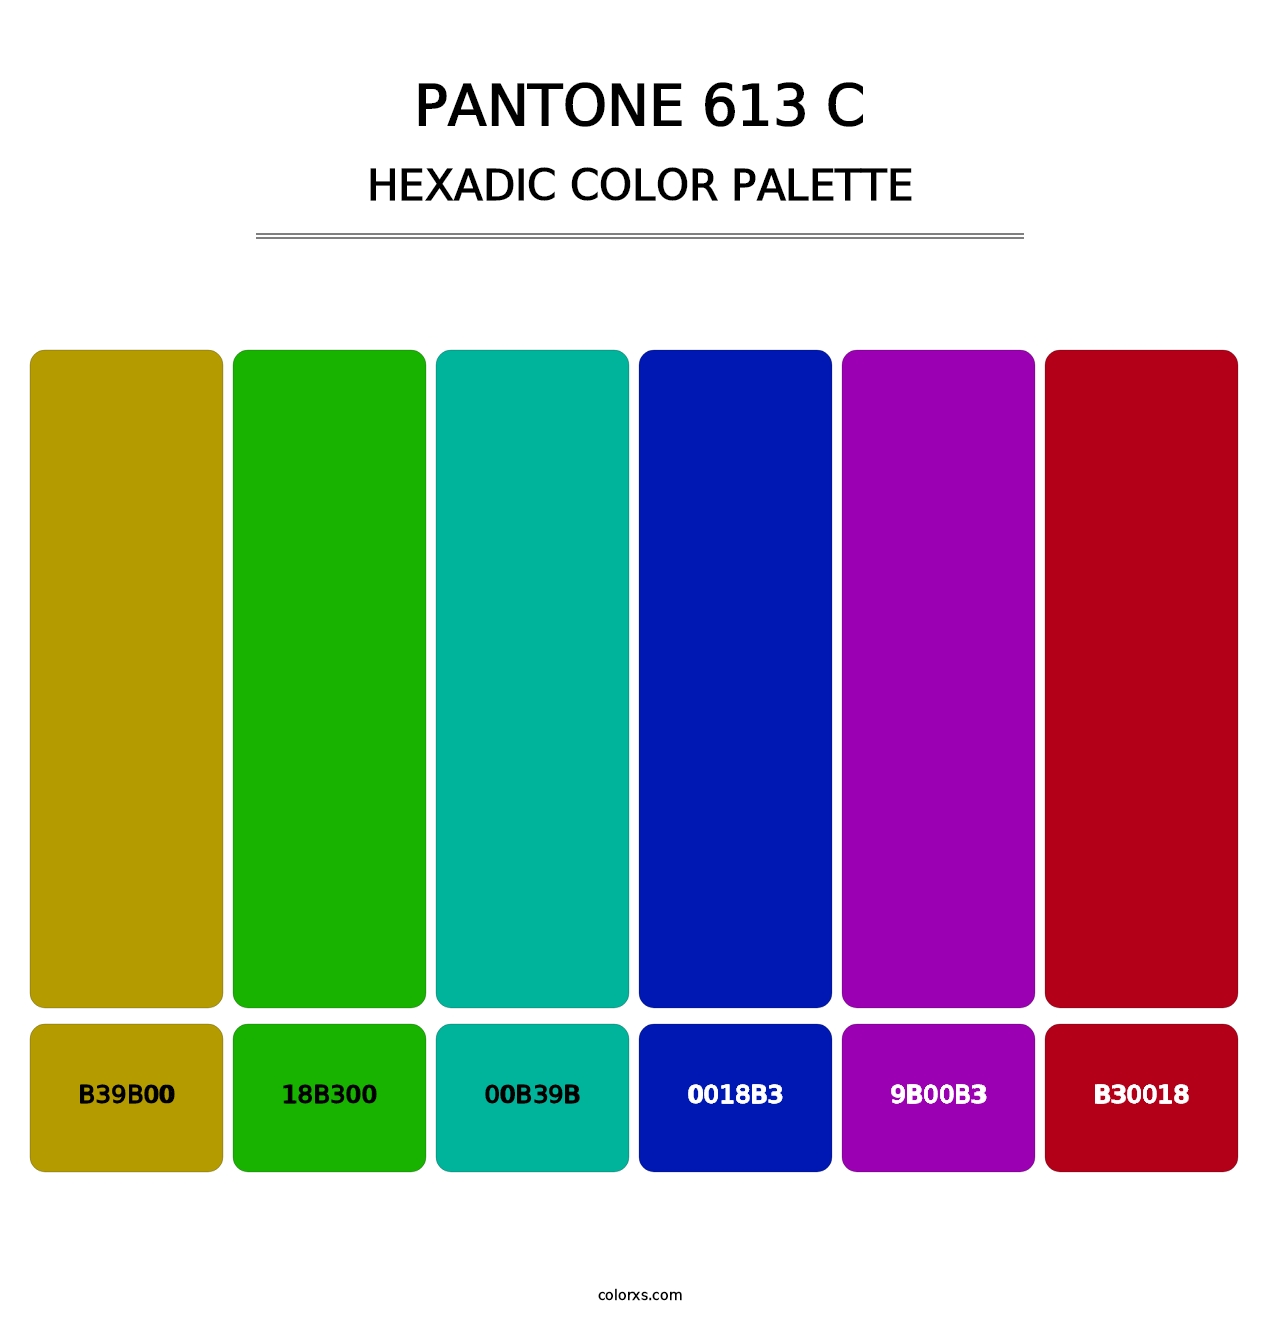 PANTONE 613 C - Hexadic Color Palette